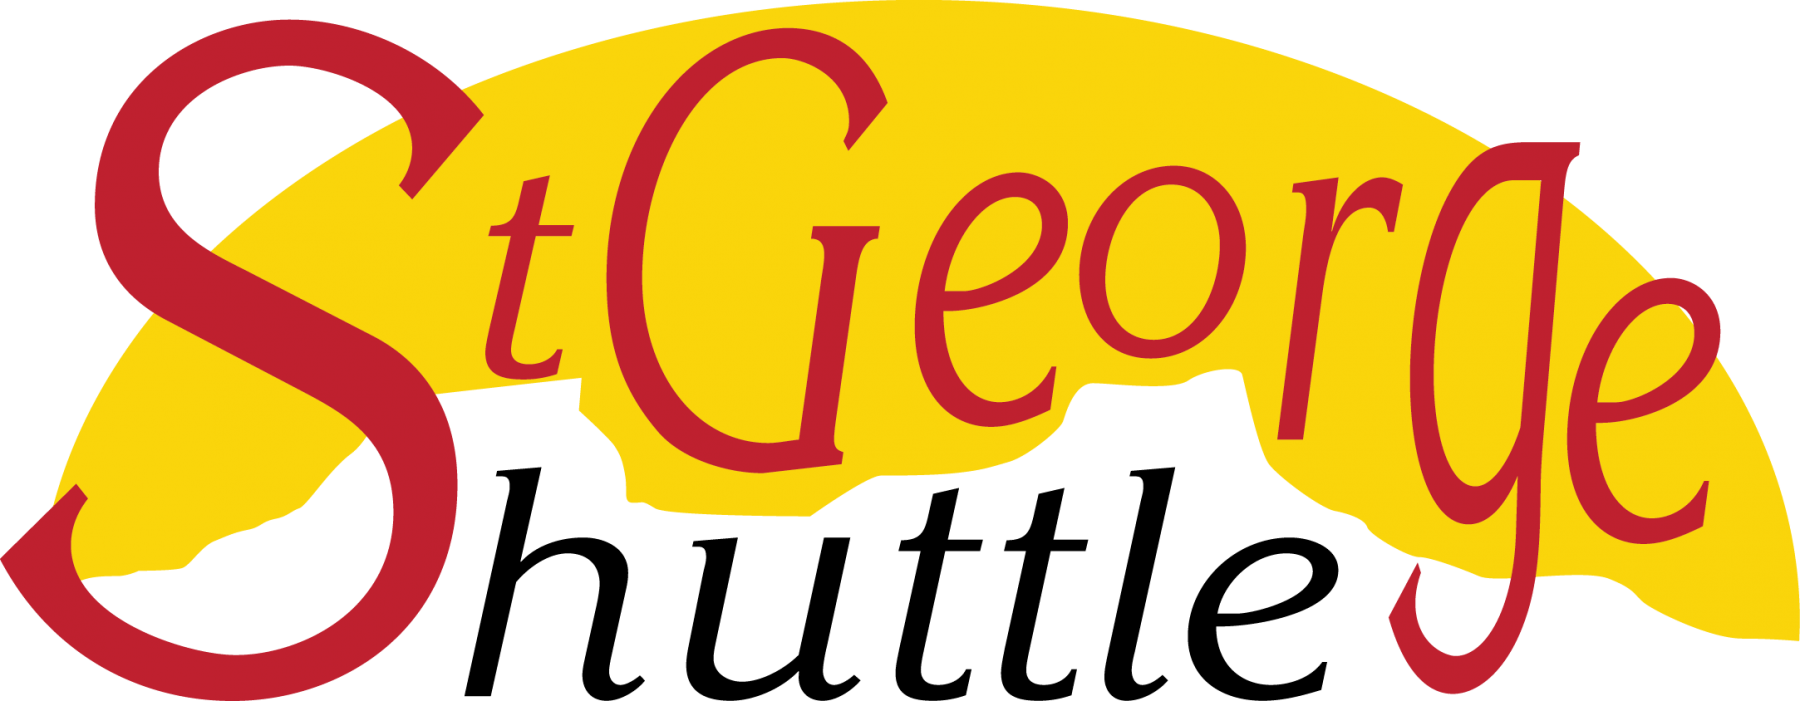 Shuttle Logo - St. George Shuttle Accommodates Travel In Zion